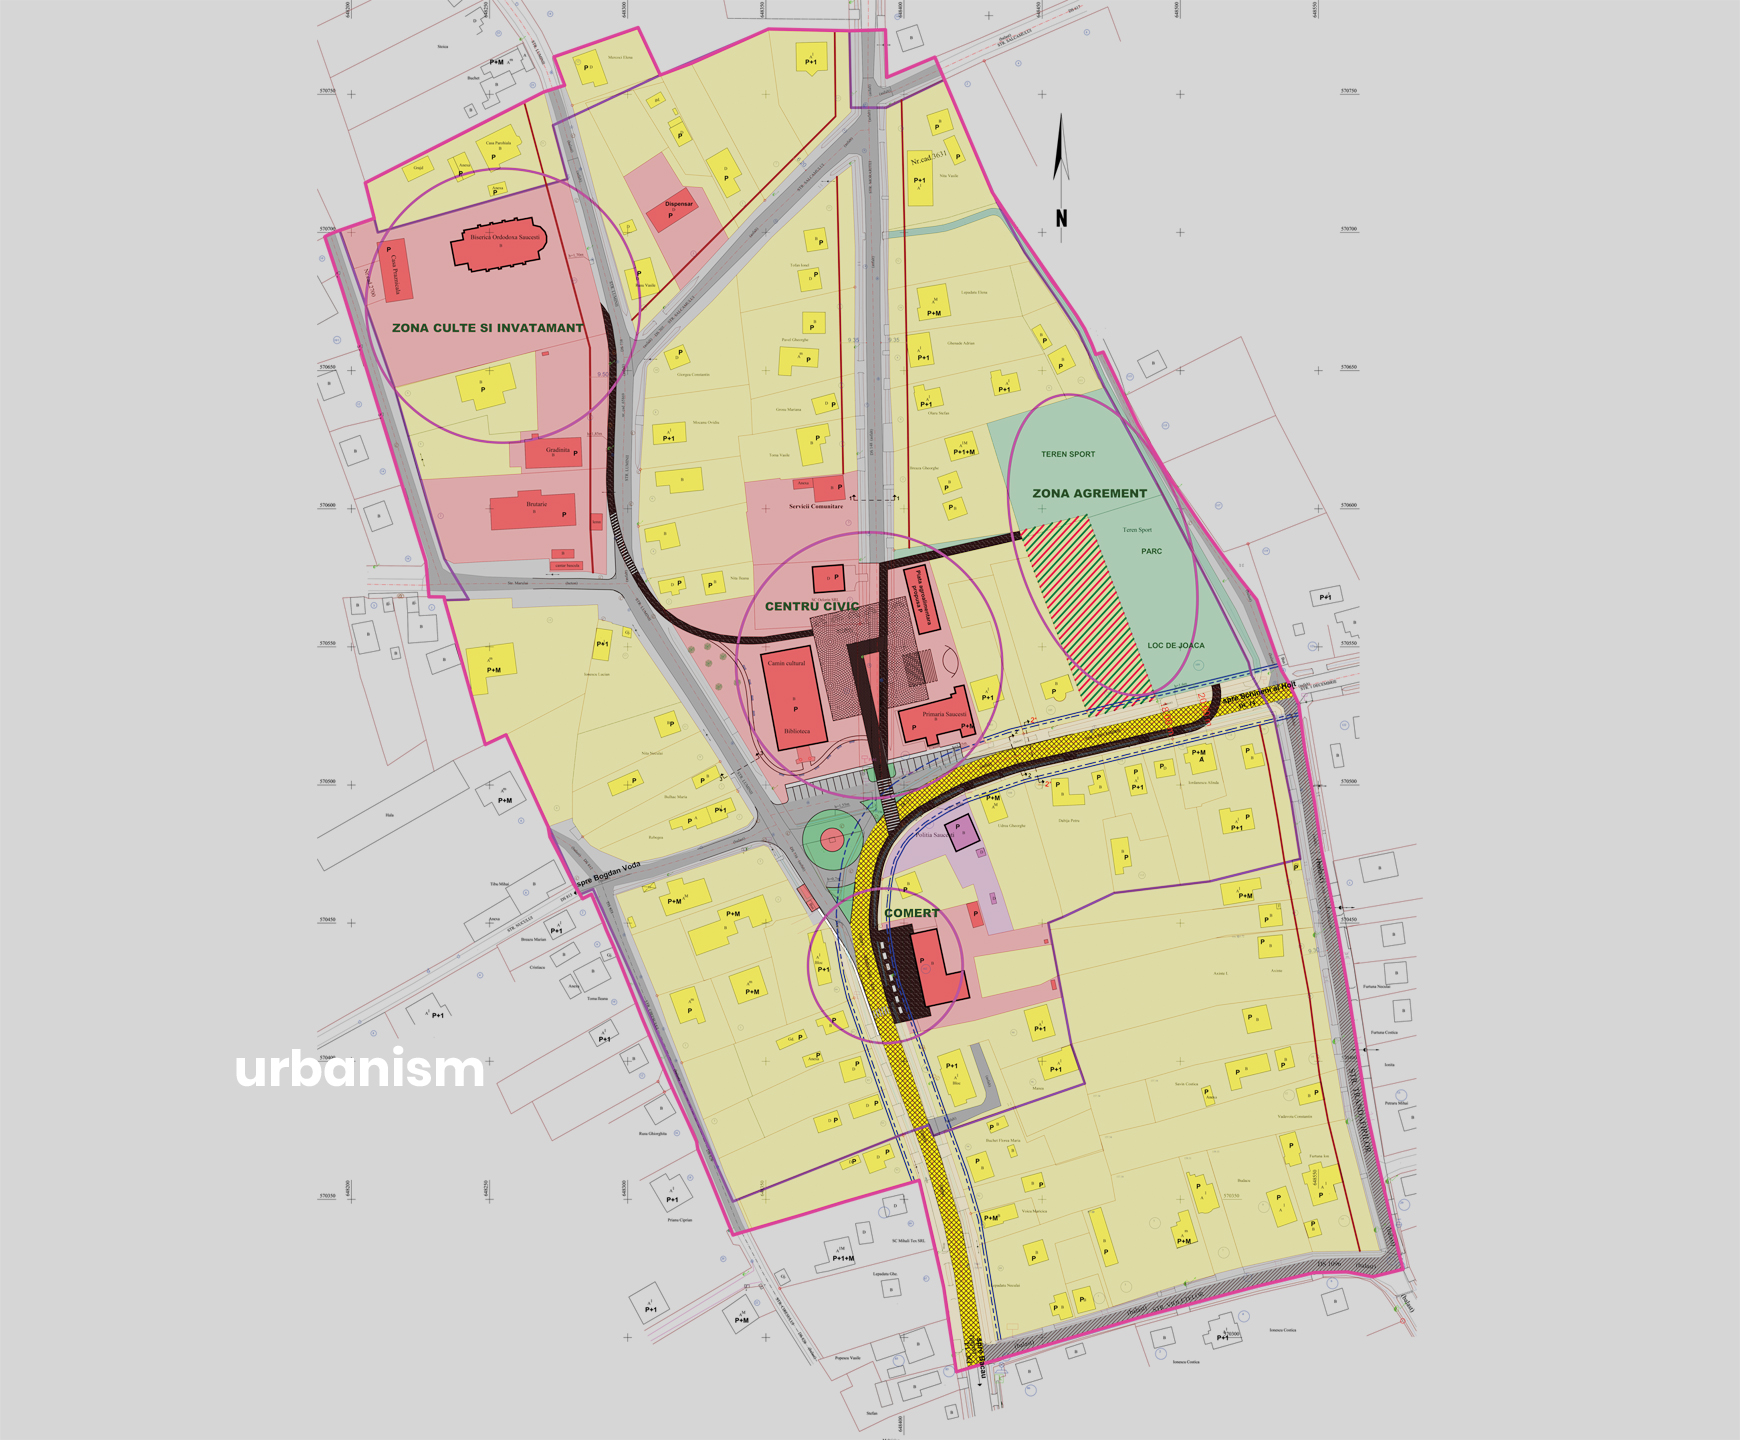 65 - urbanism